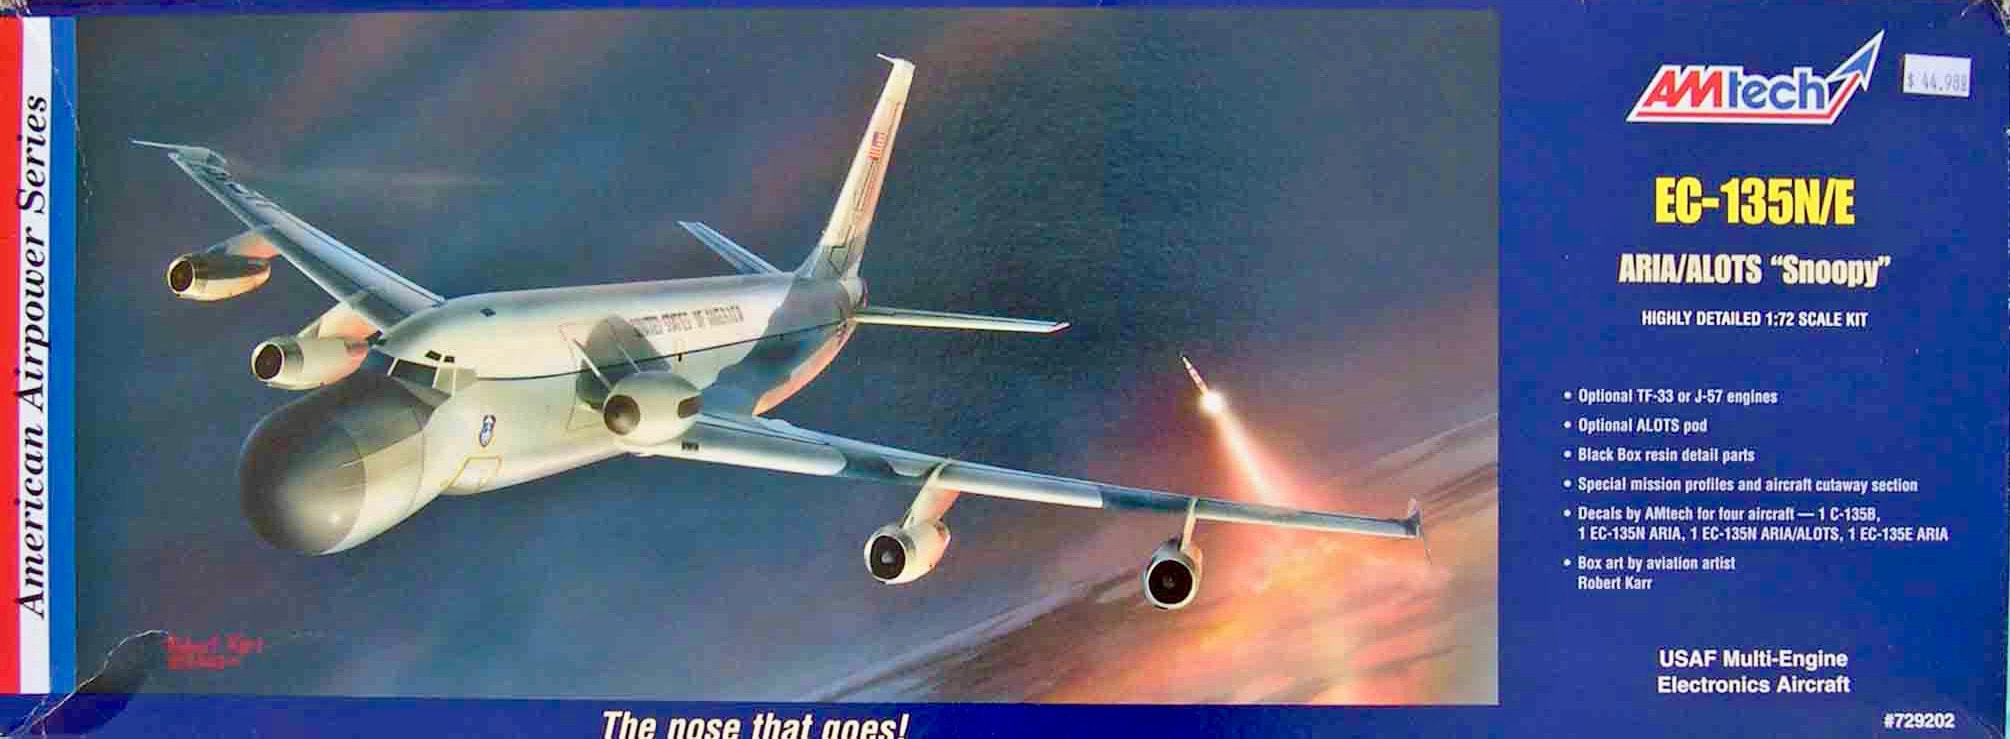 1:72 Scale KC-135R CFM56 Engines 